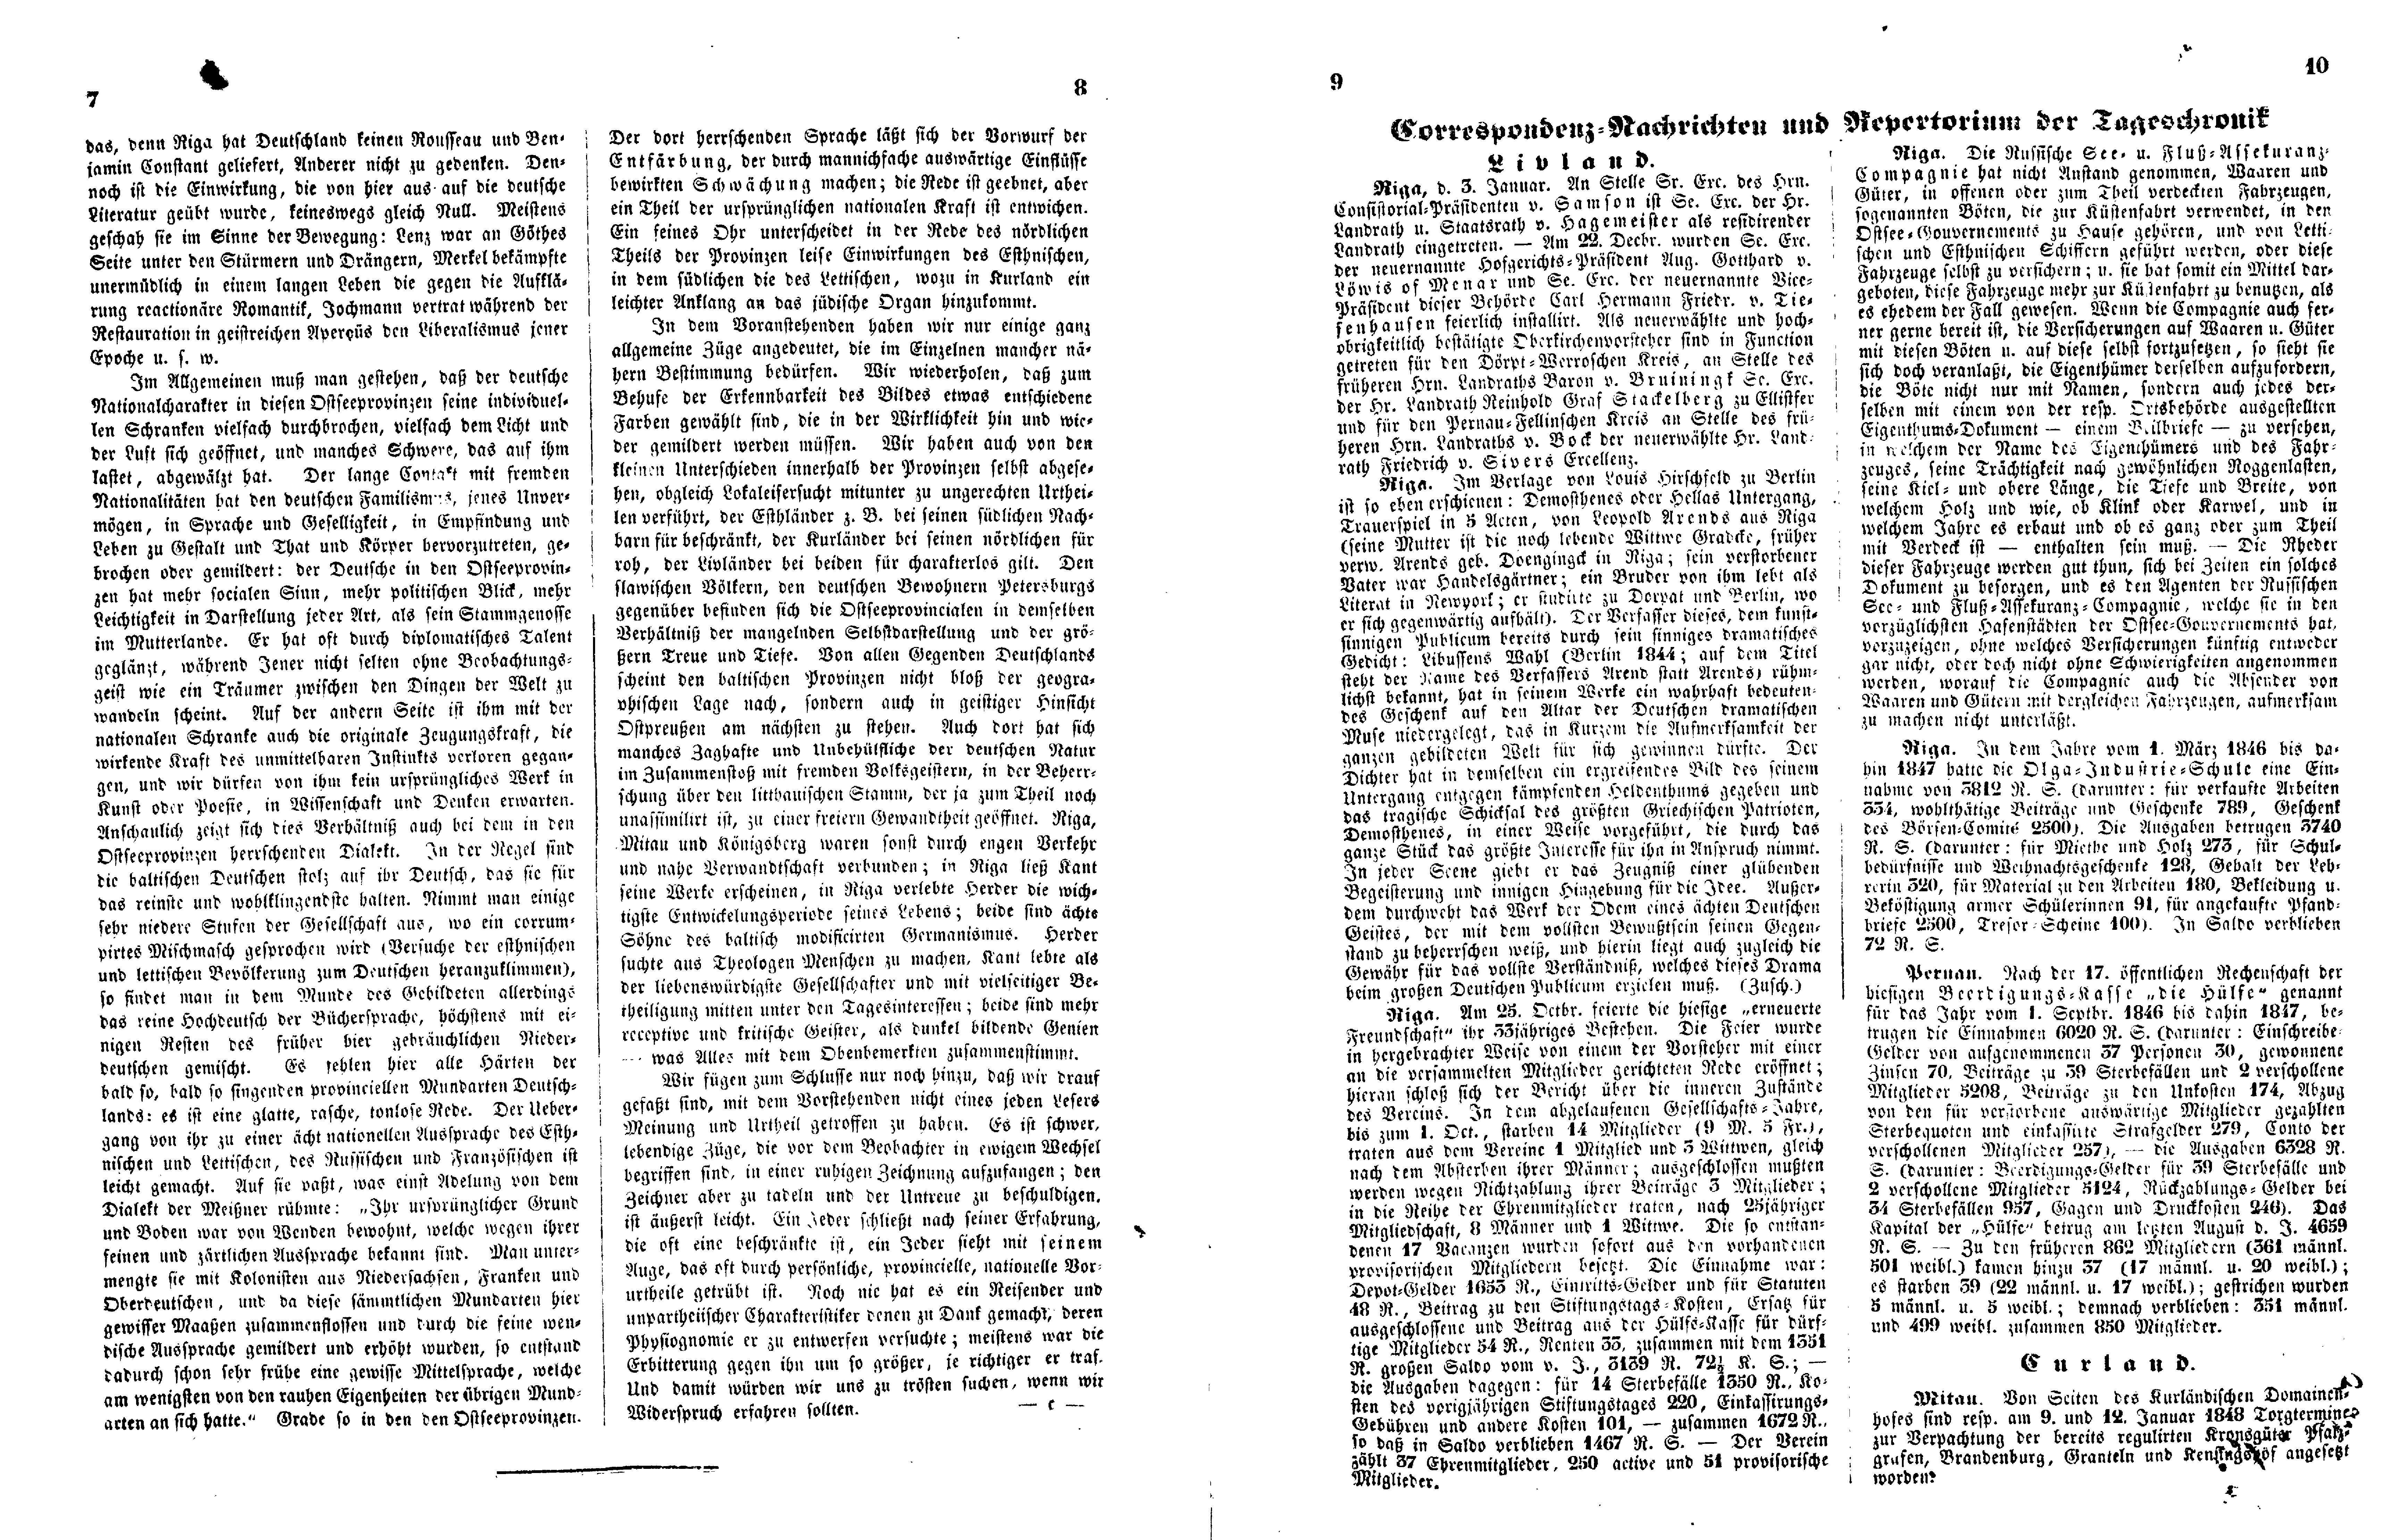 Das Inland [13] (1848) | 7. (7-10) Main body of text